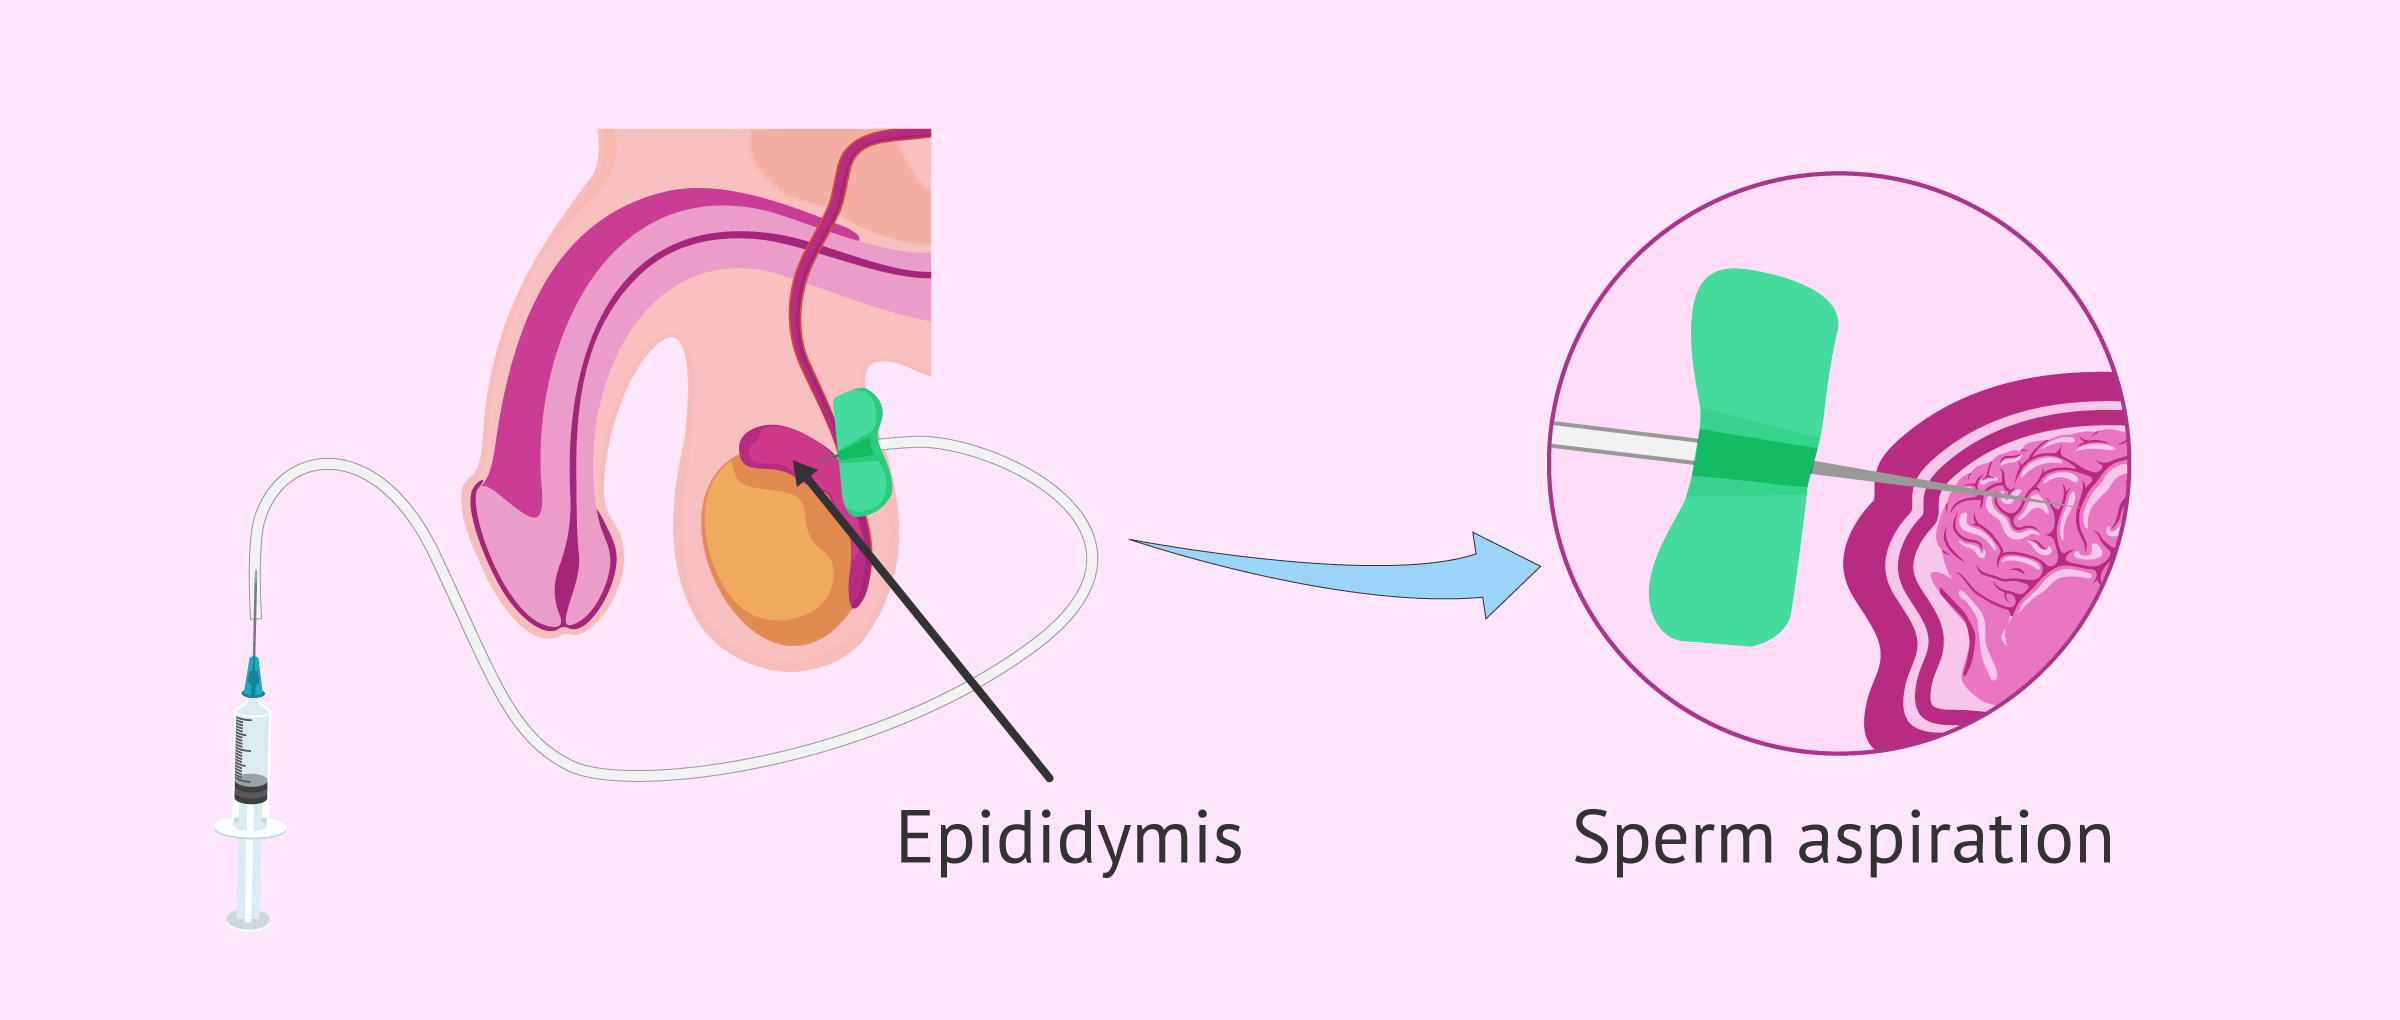 Sperm aspiration from the epididymis by PESA